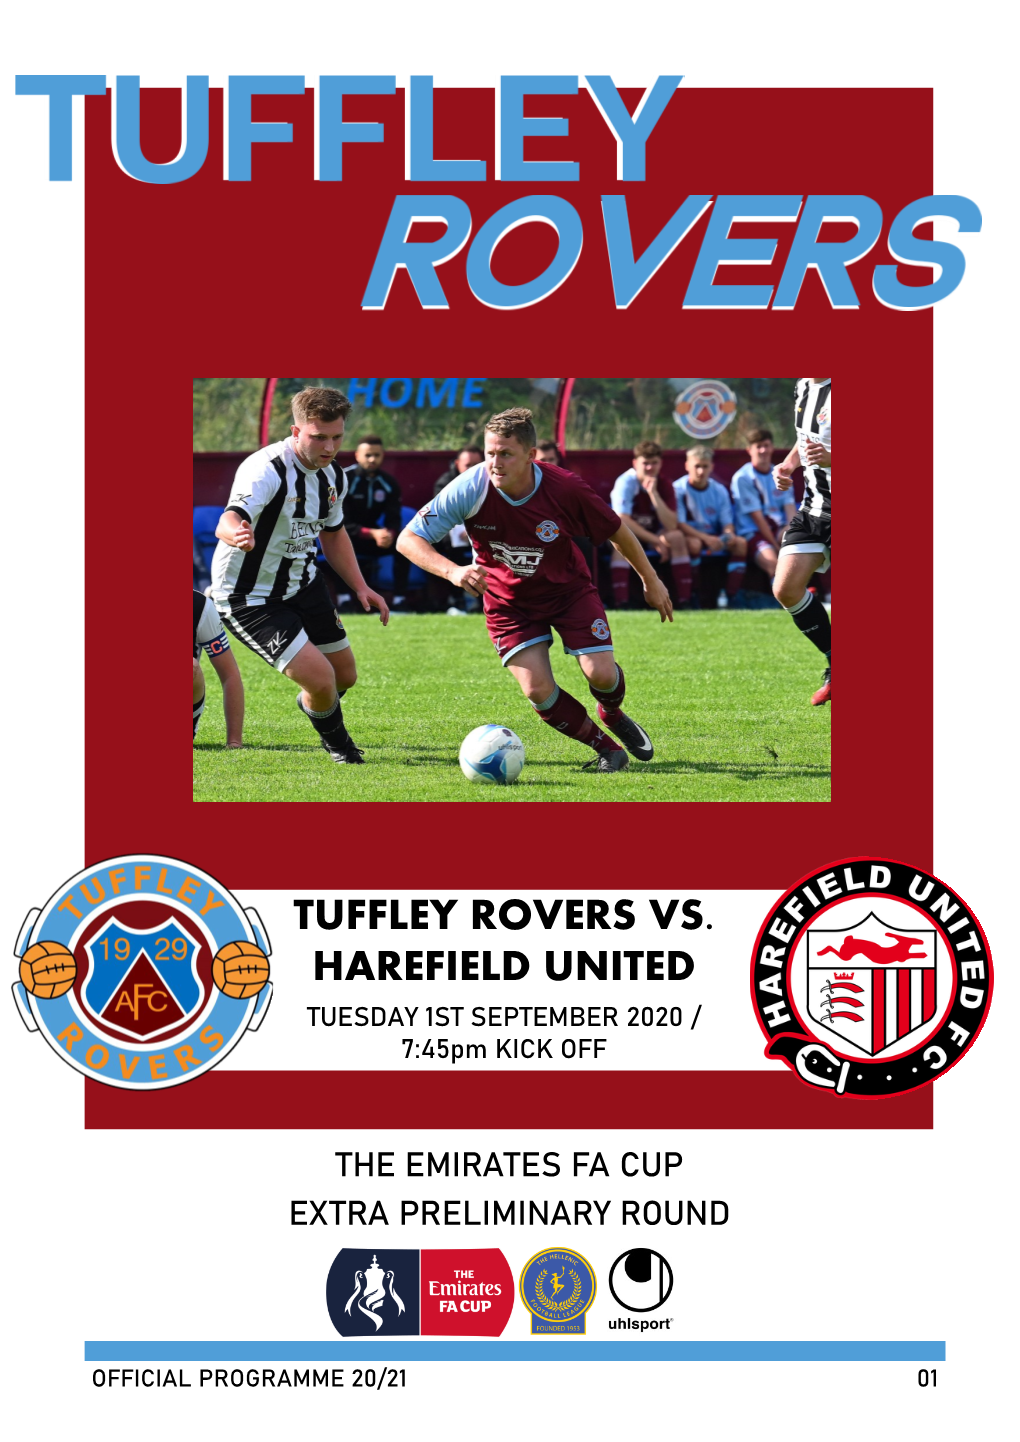 TUFFLEY ROVERS VS. HAREFIELD UNITED TUESDAY 1ST SEPTEMBER 2020 / 7:45Pm KICK OFF